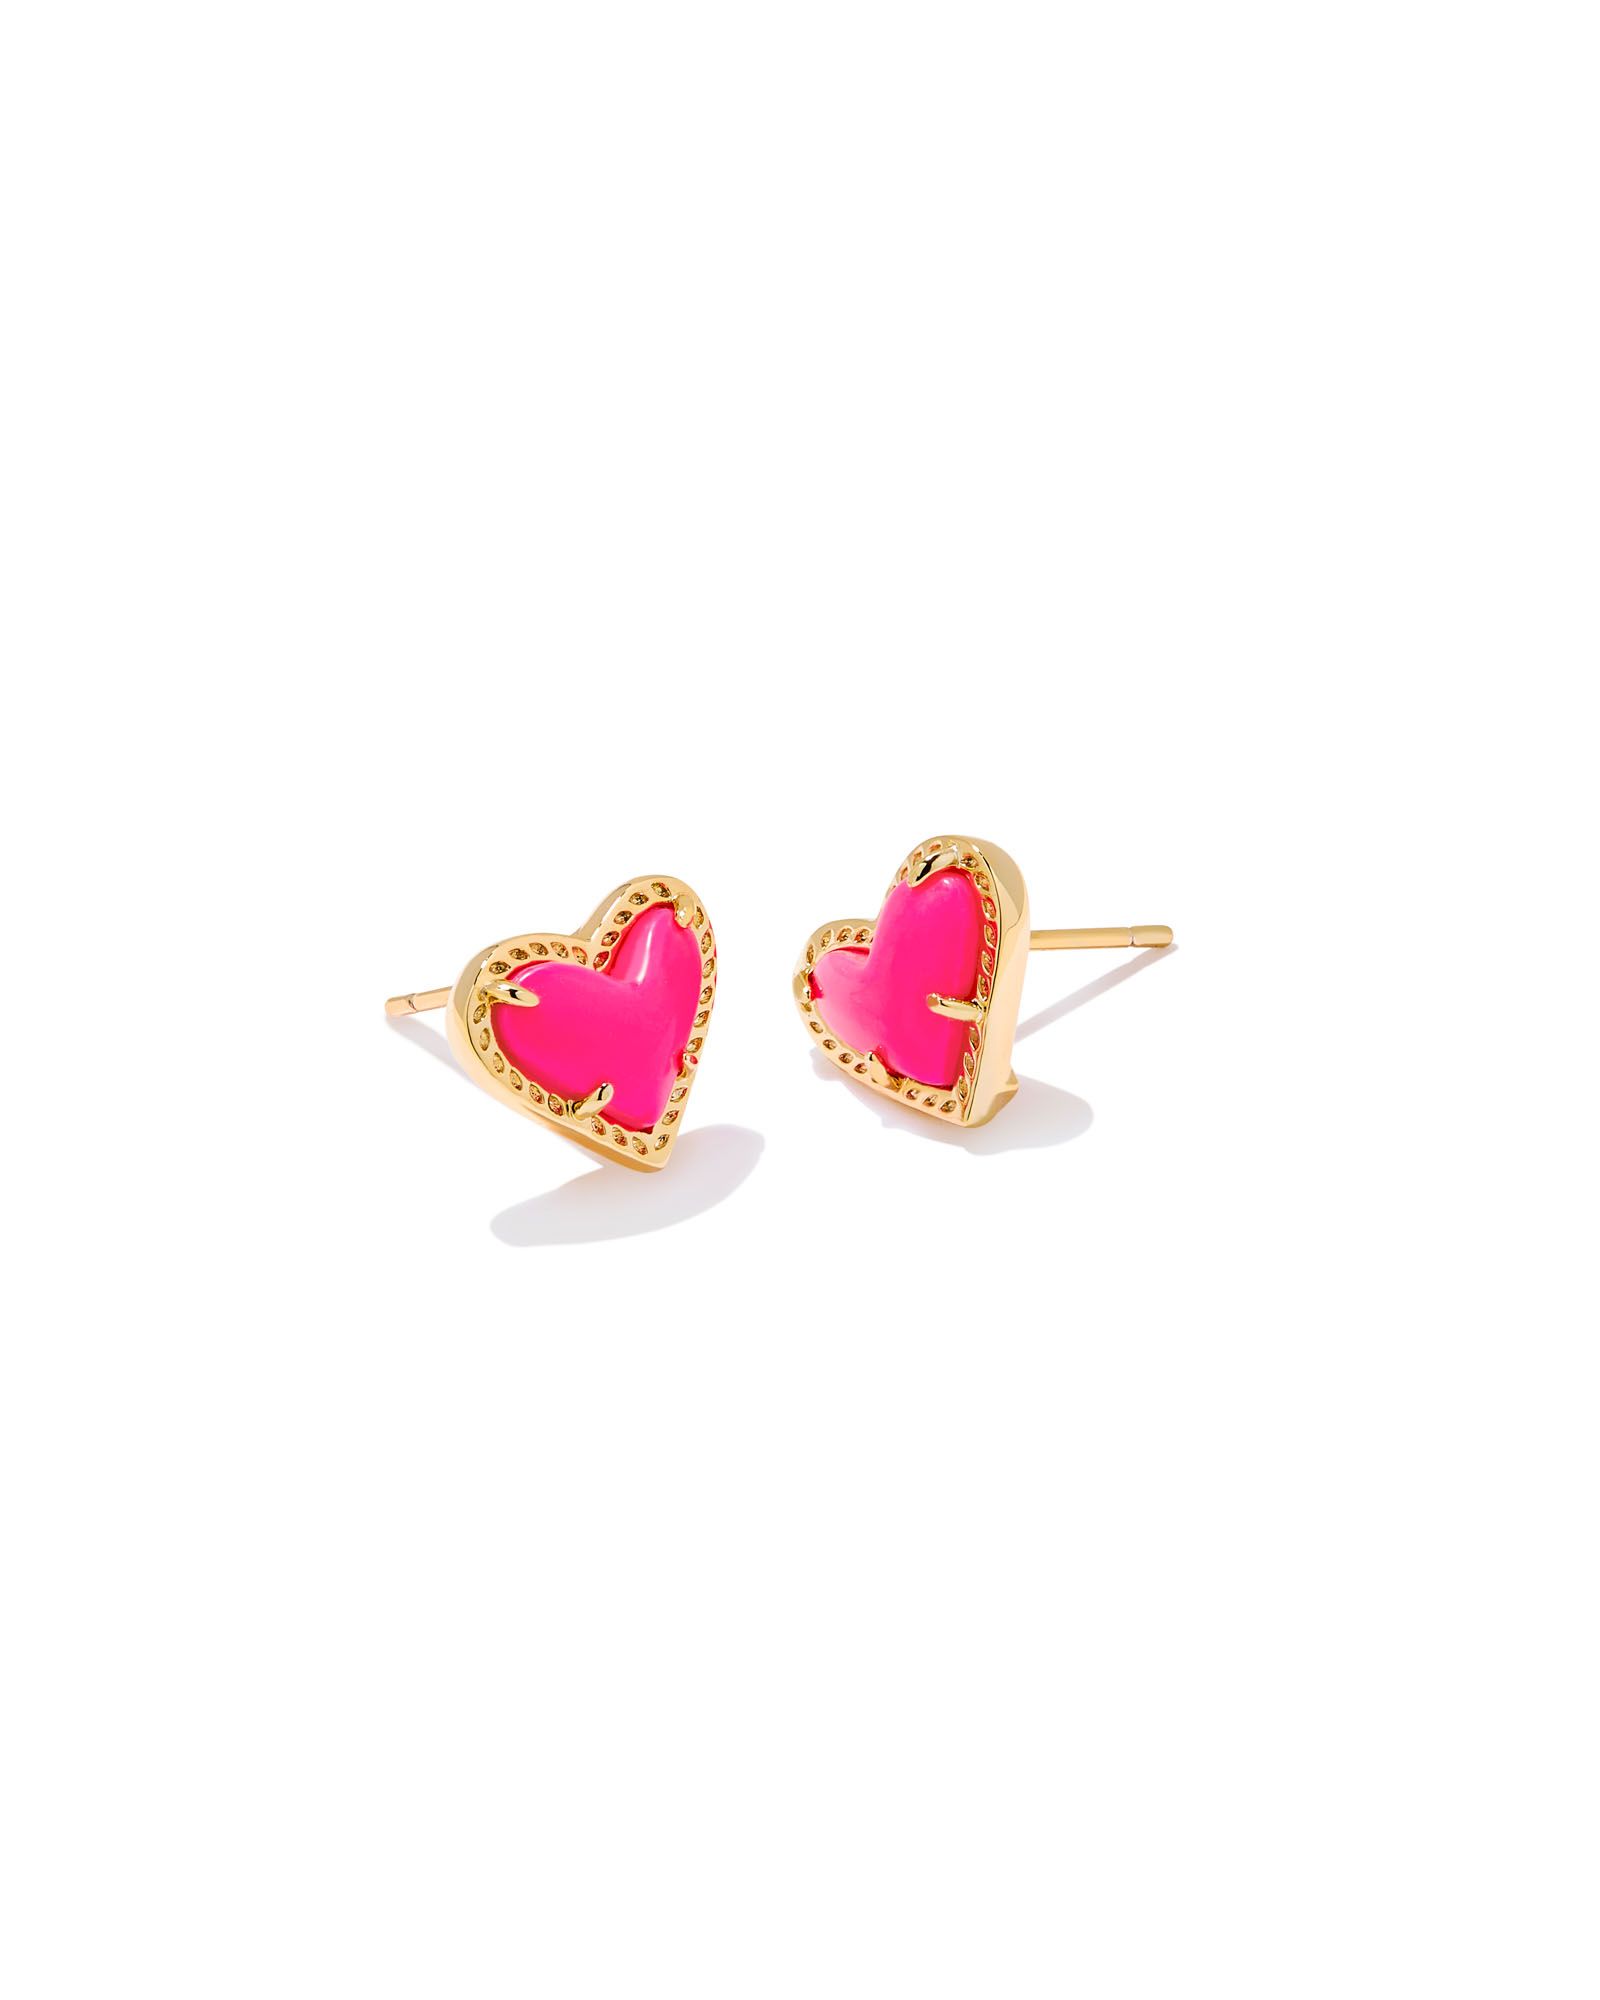 Ari Heart Gold Stud Earrings in Neon Pink Magnesite | Kendra Scott